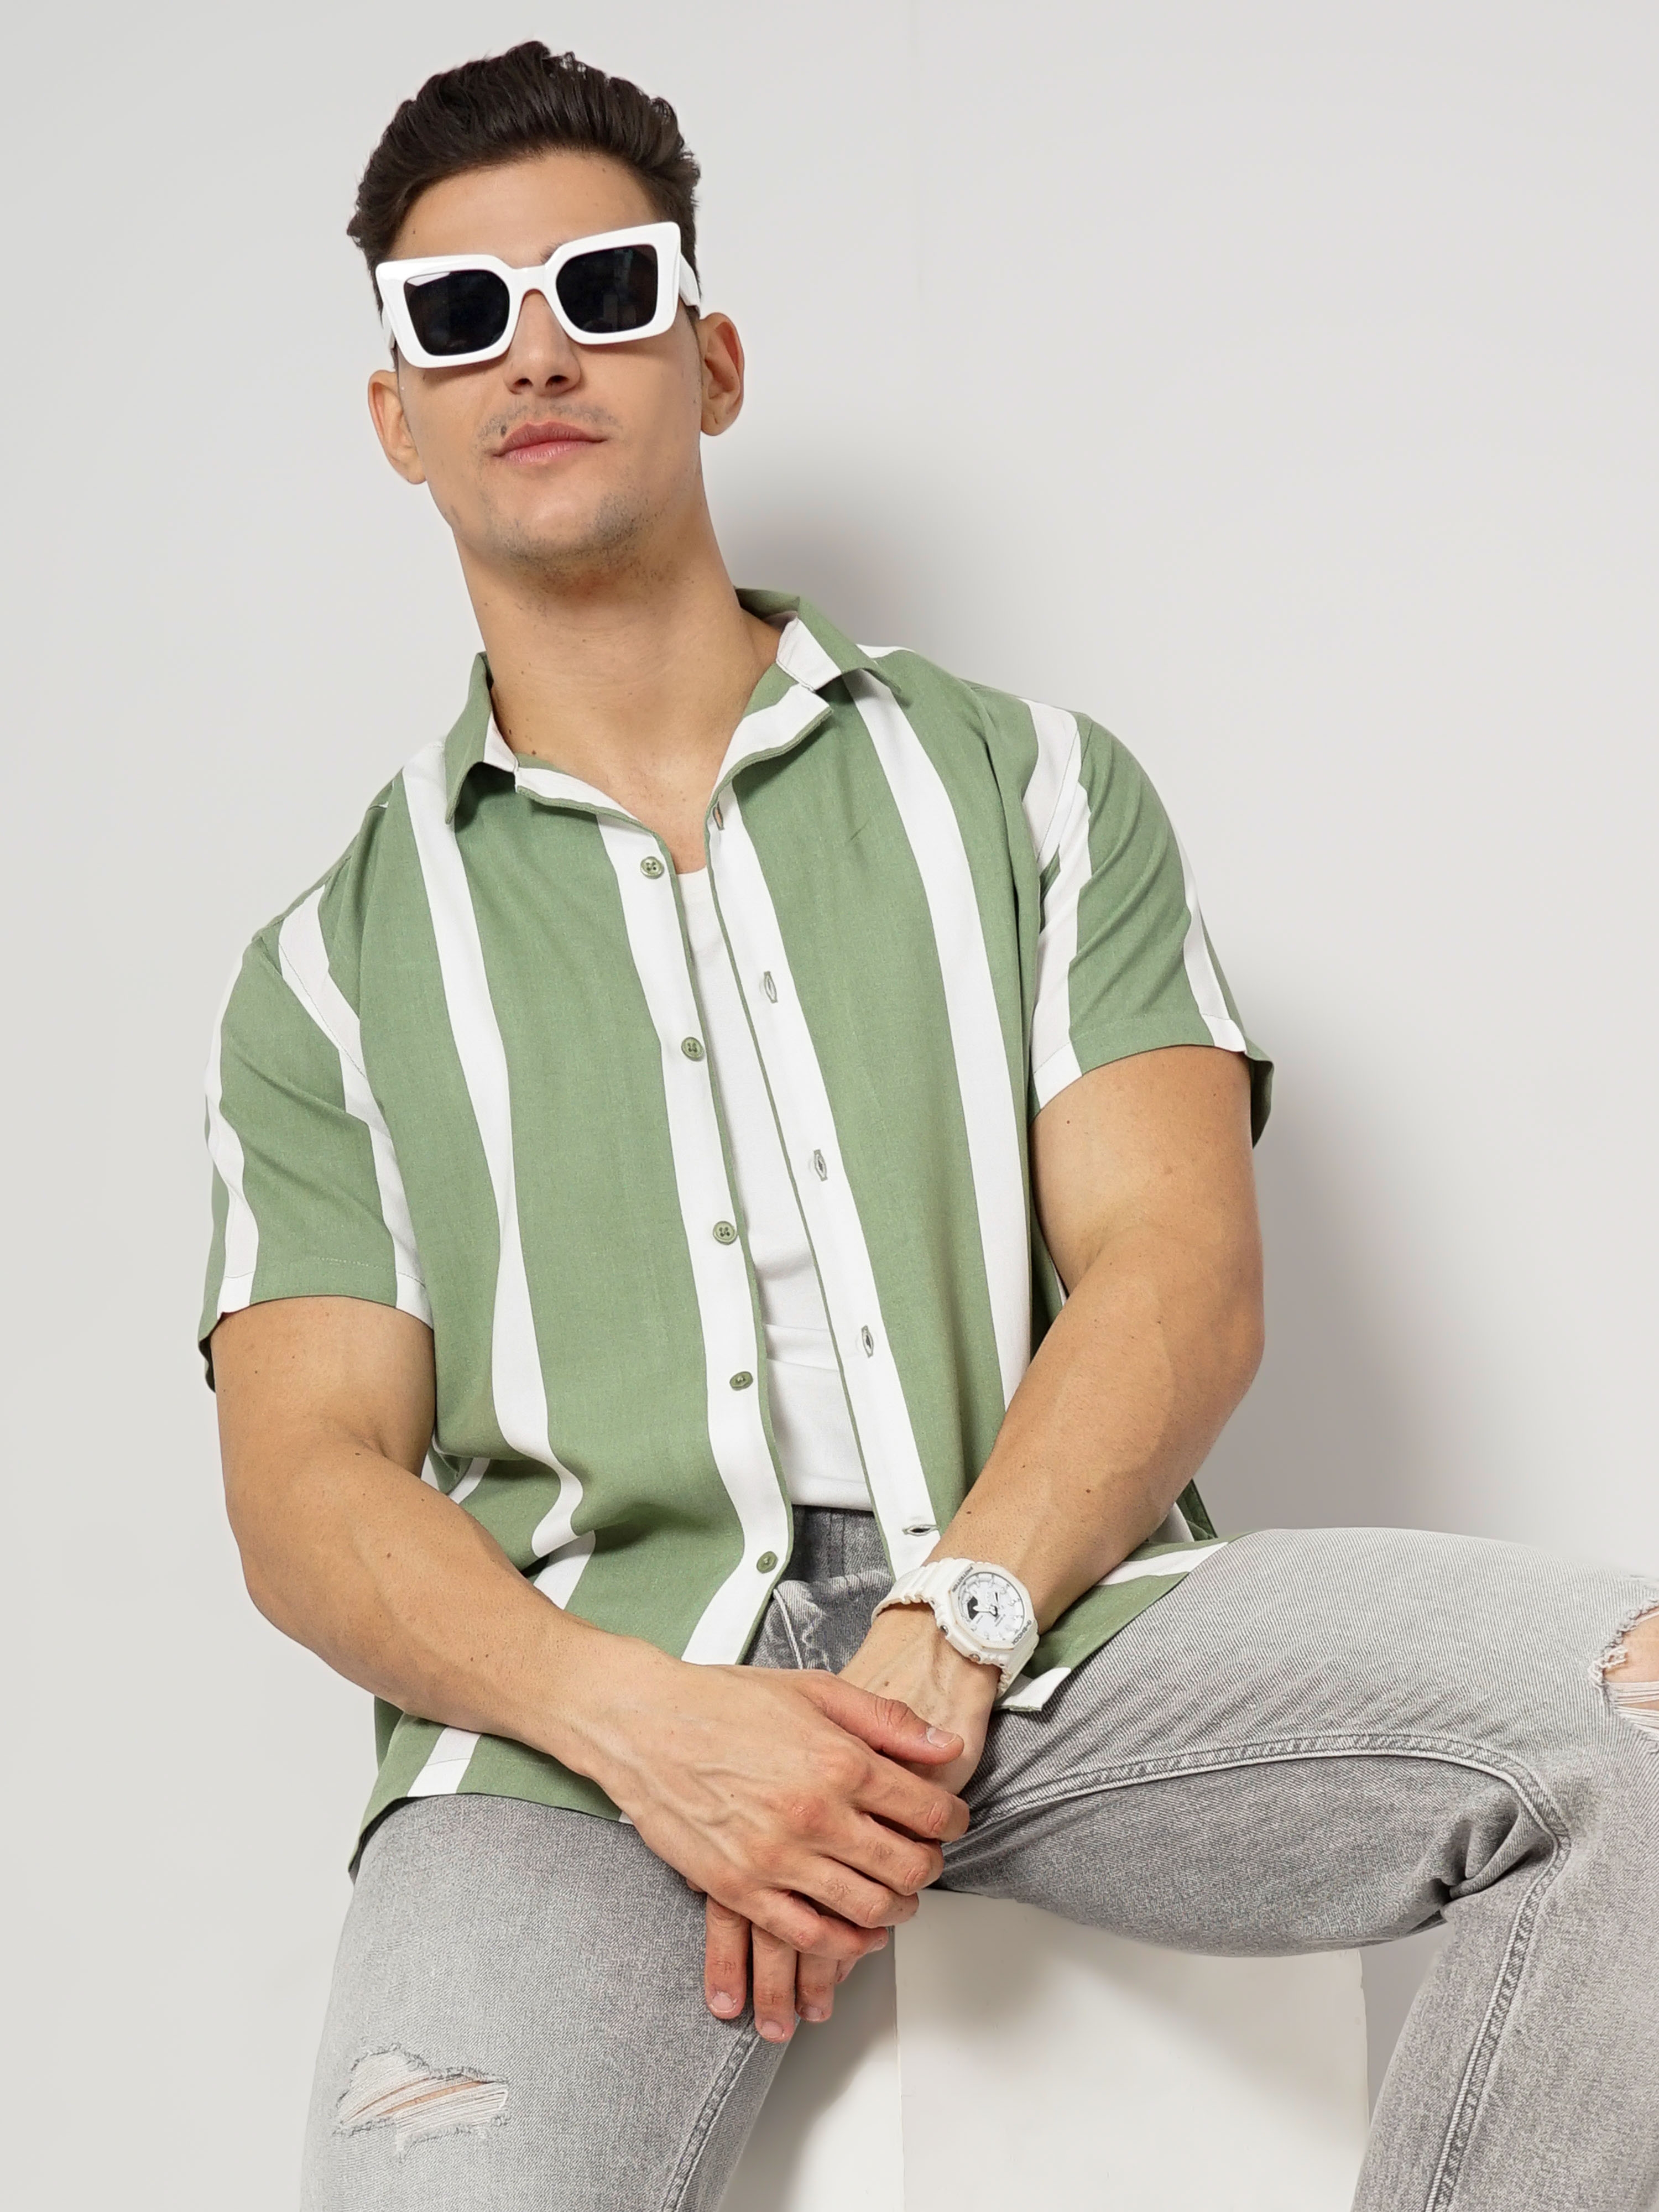 Men's Green Striped Casual Shirts